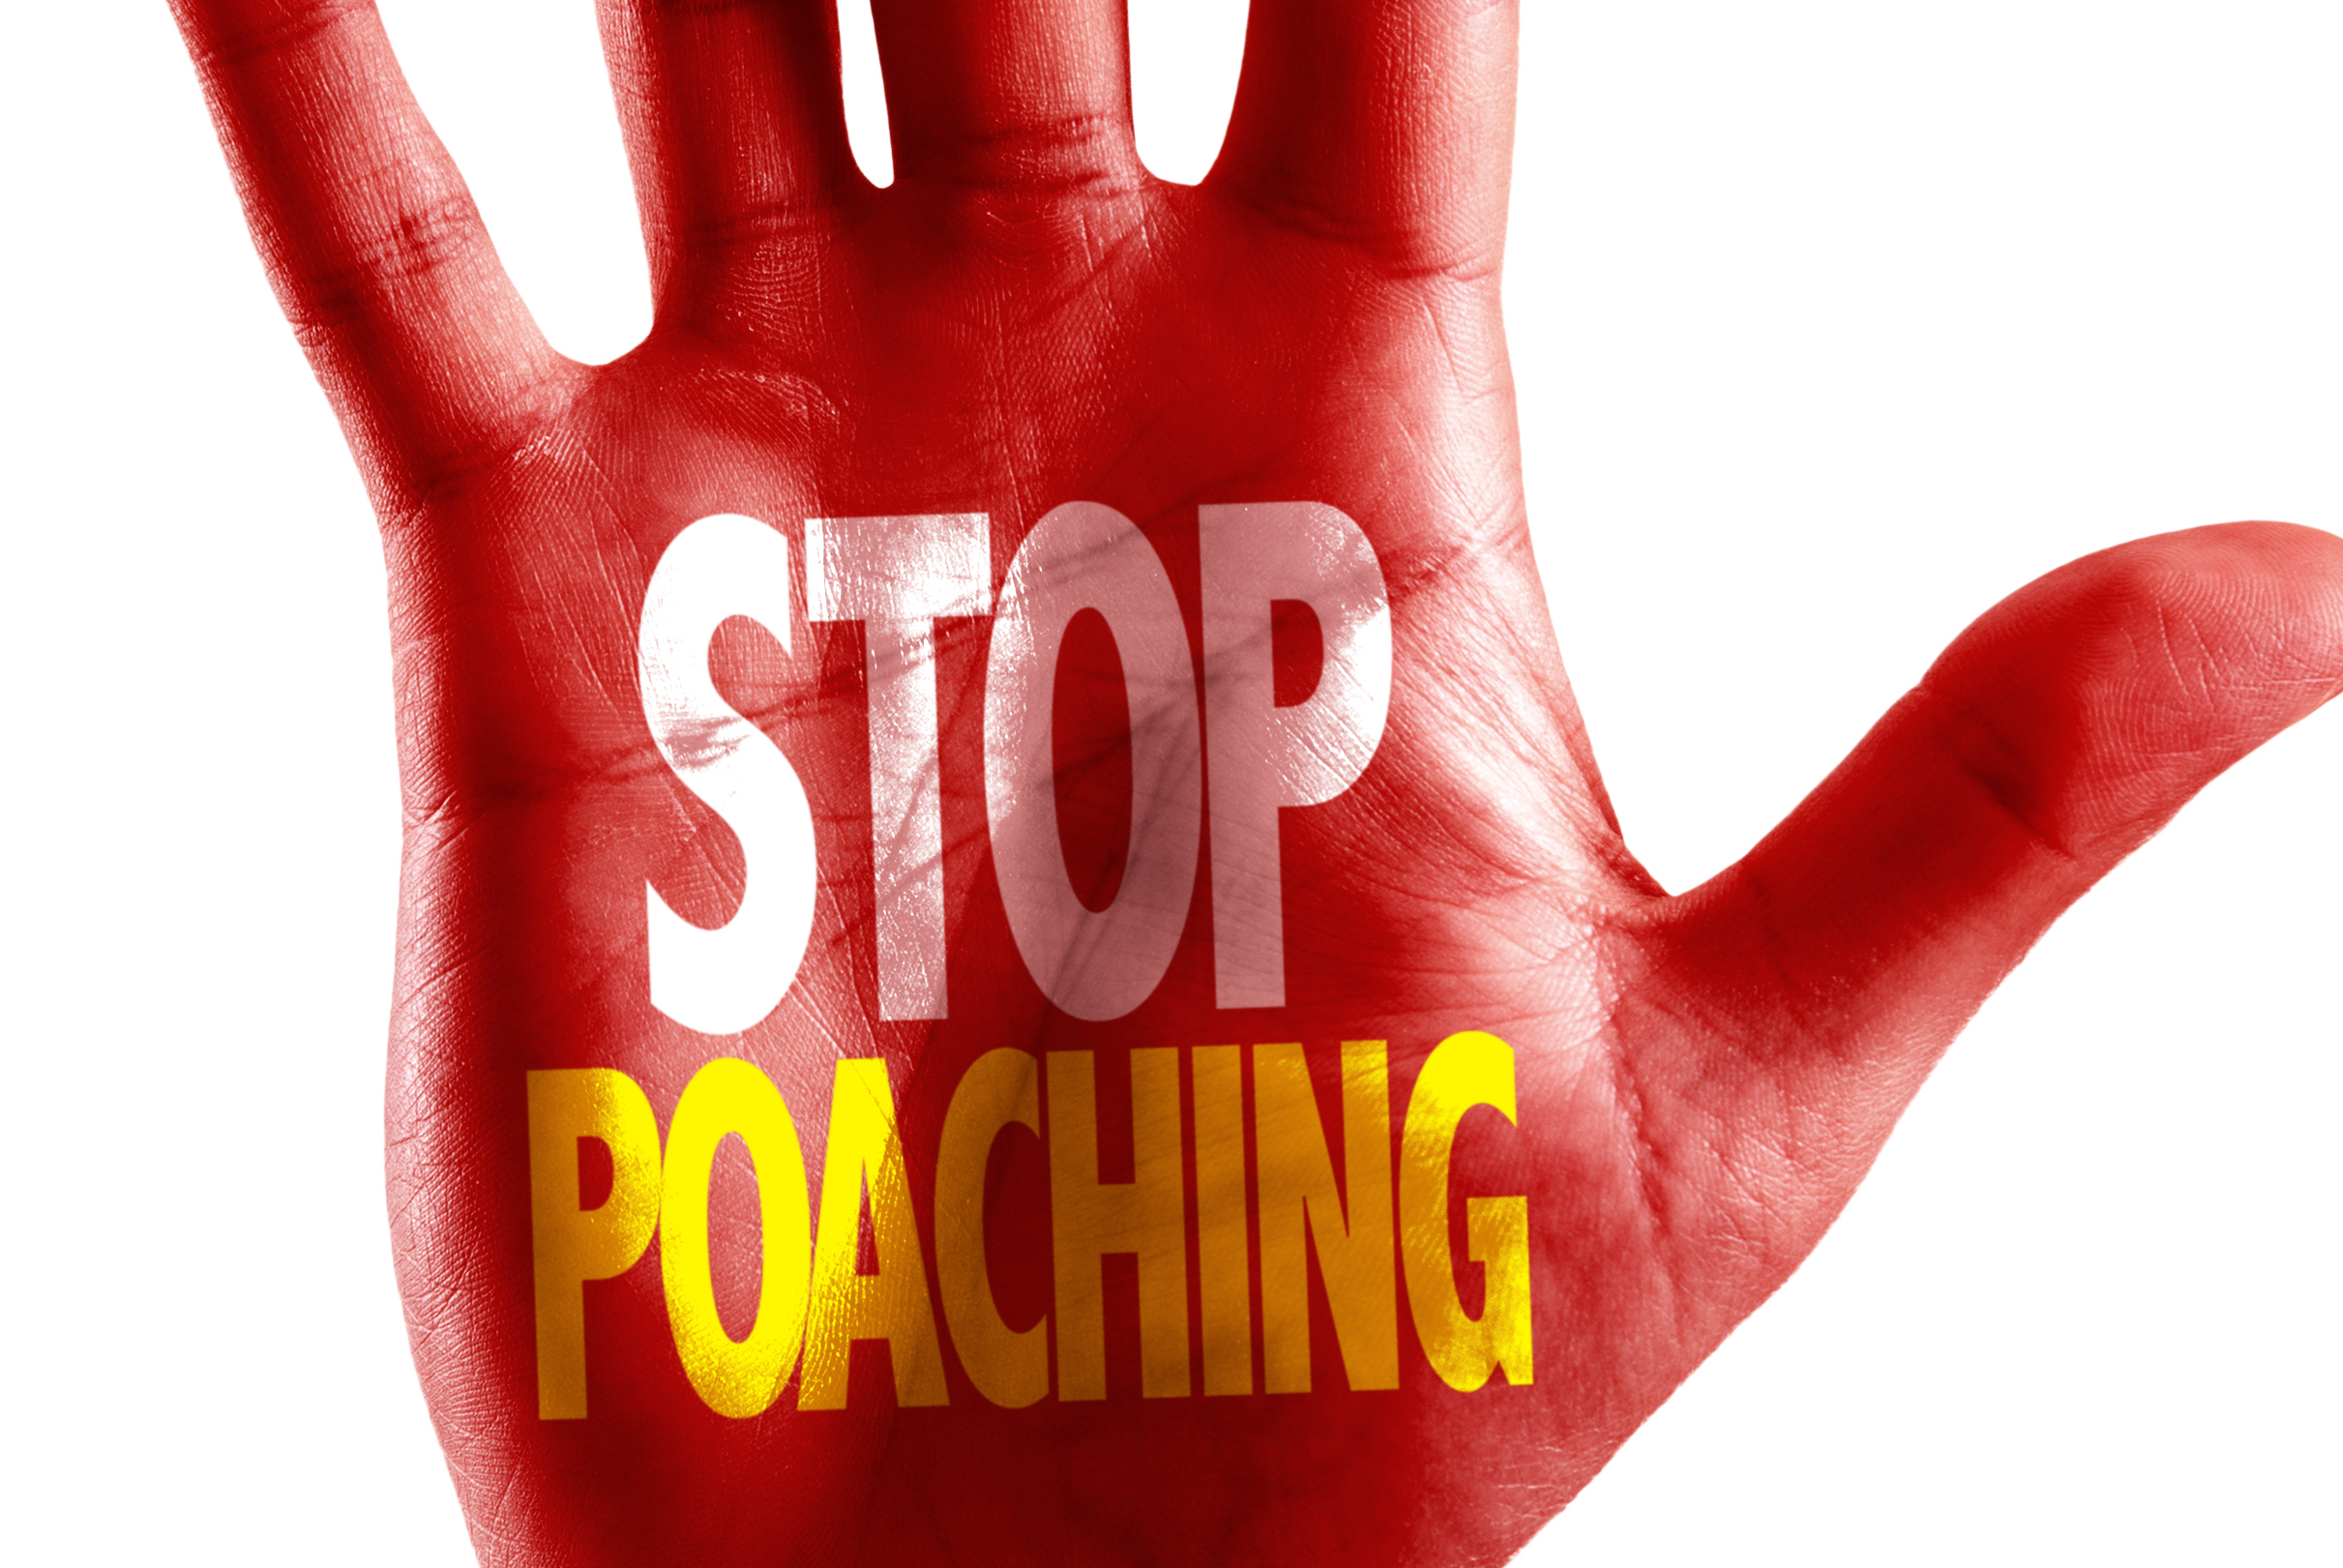 66 Counts: 8 Indicted in Ohio Deer Poaching Case